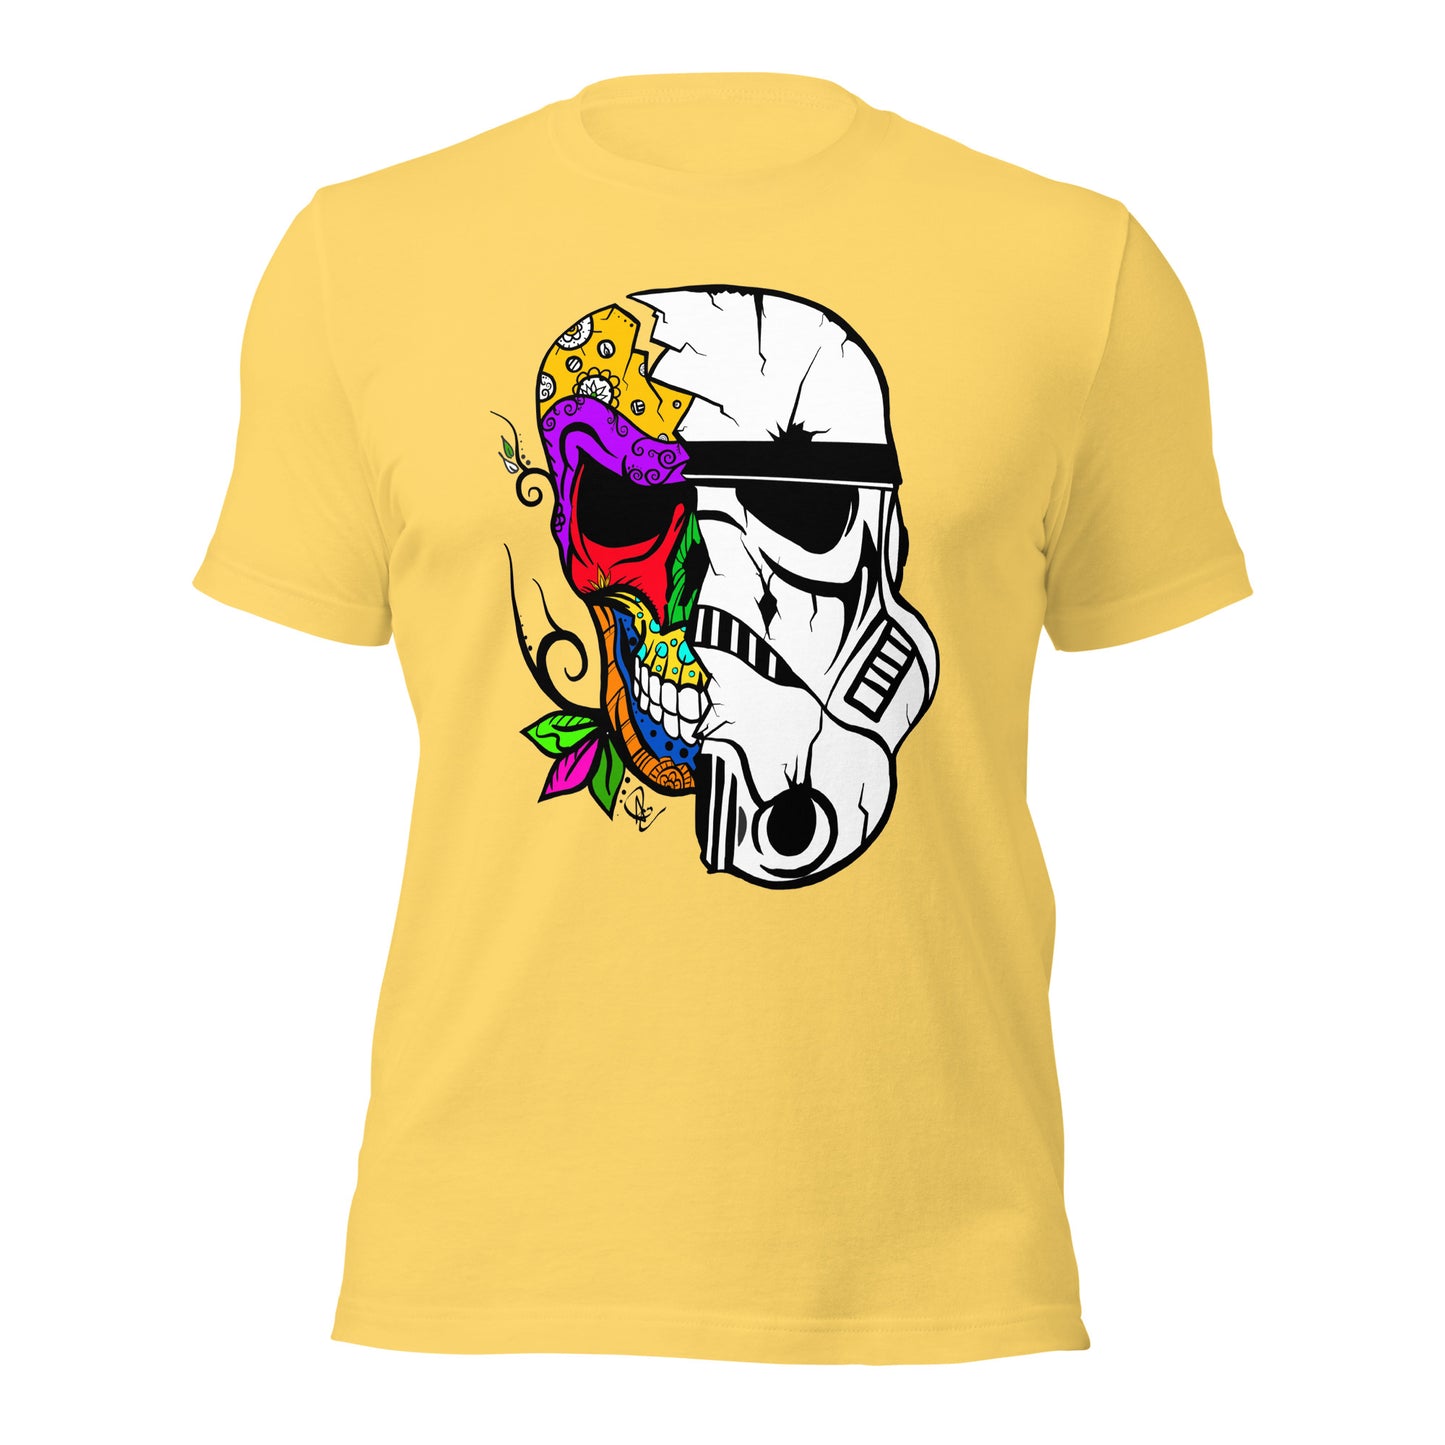 S-Trooper - Unisex t-shirt